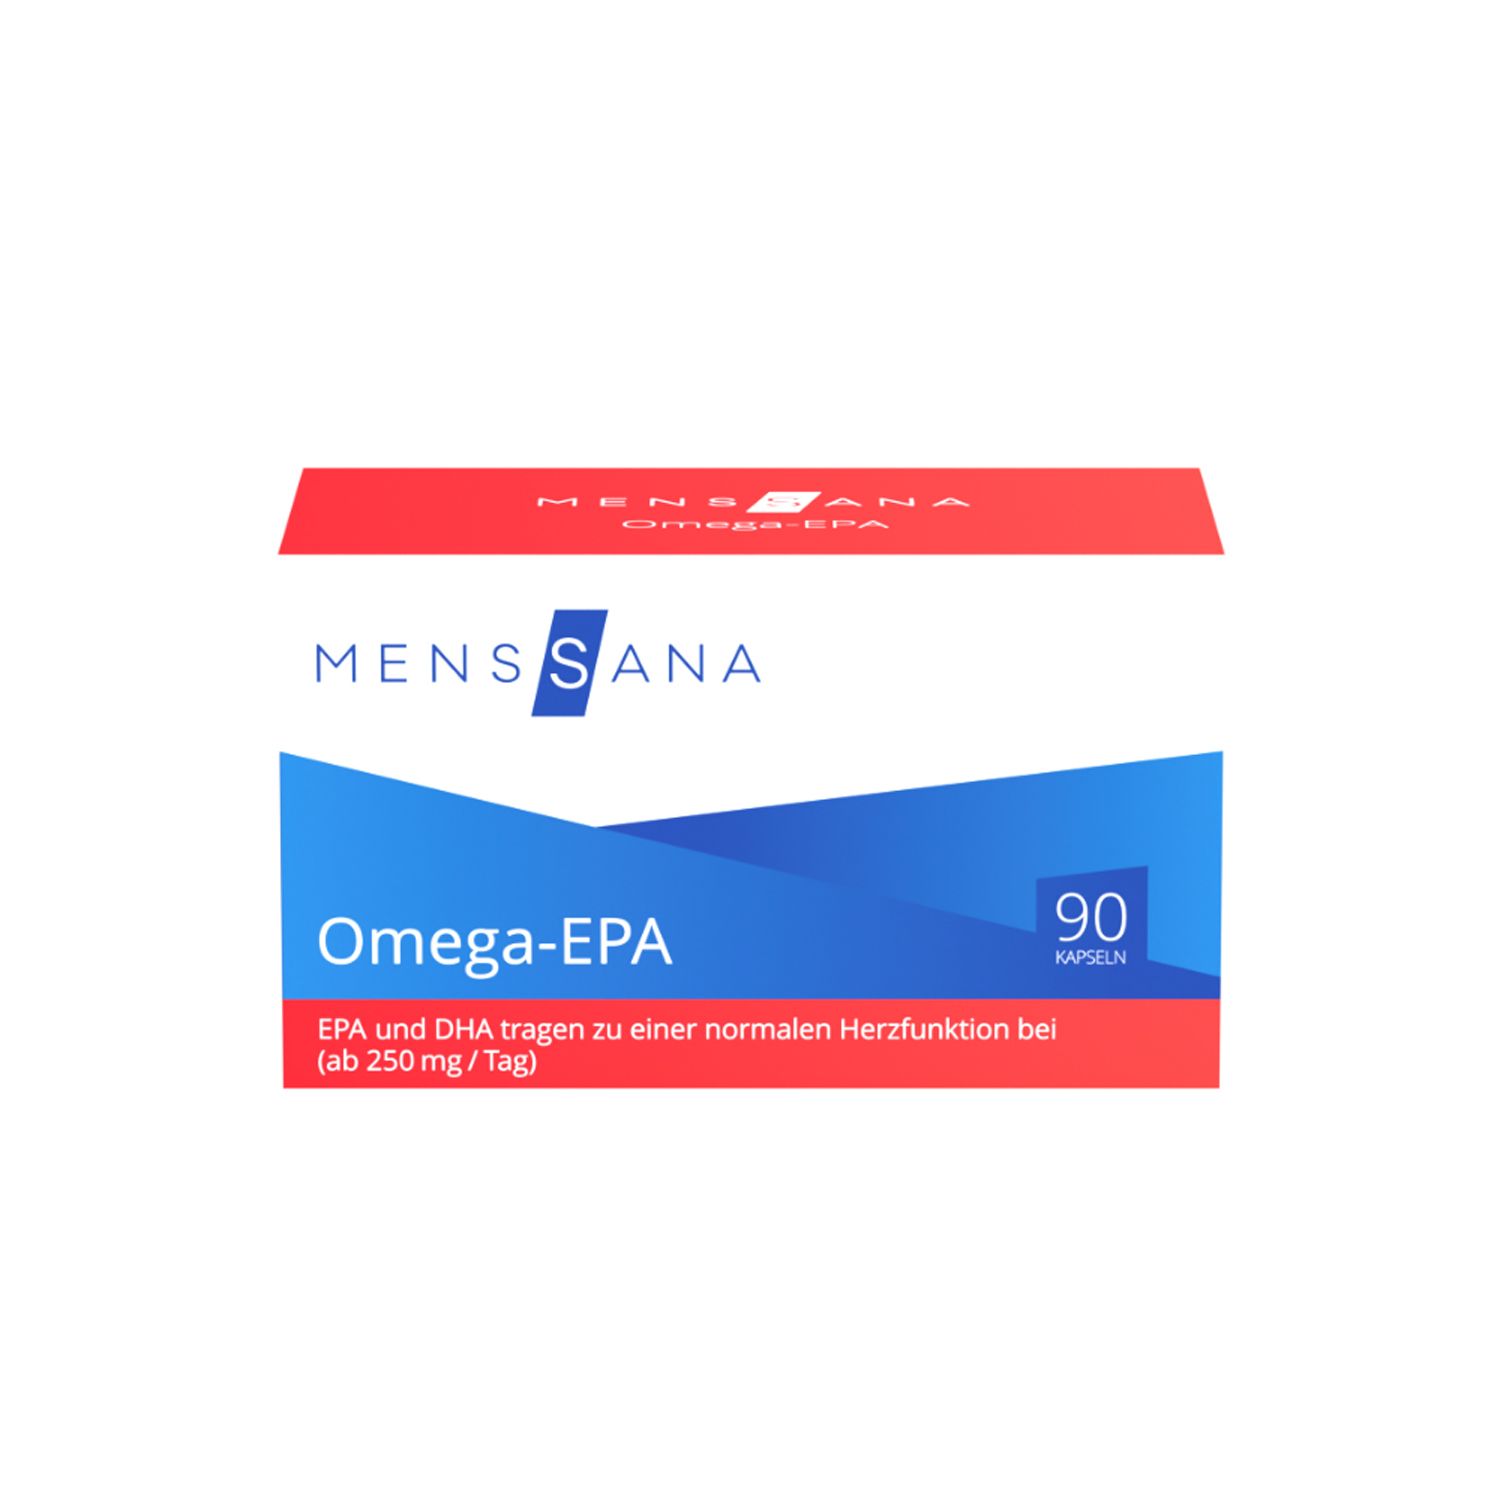 Image of MensSana Omega-EPA